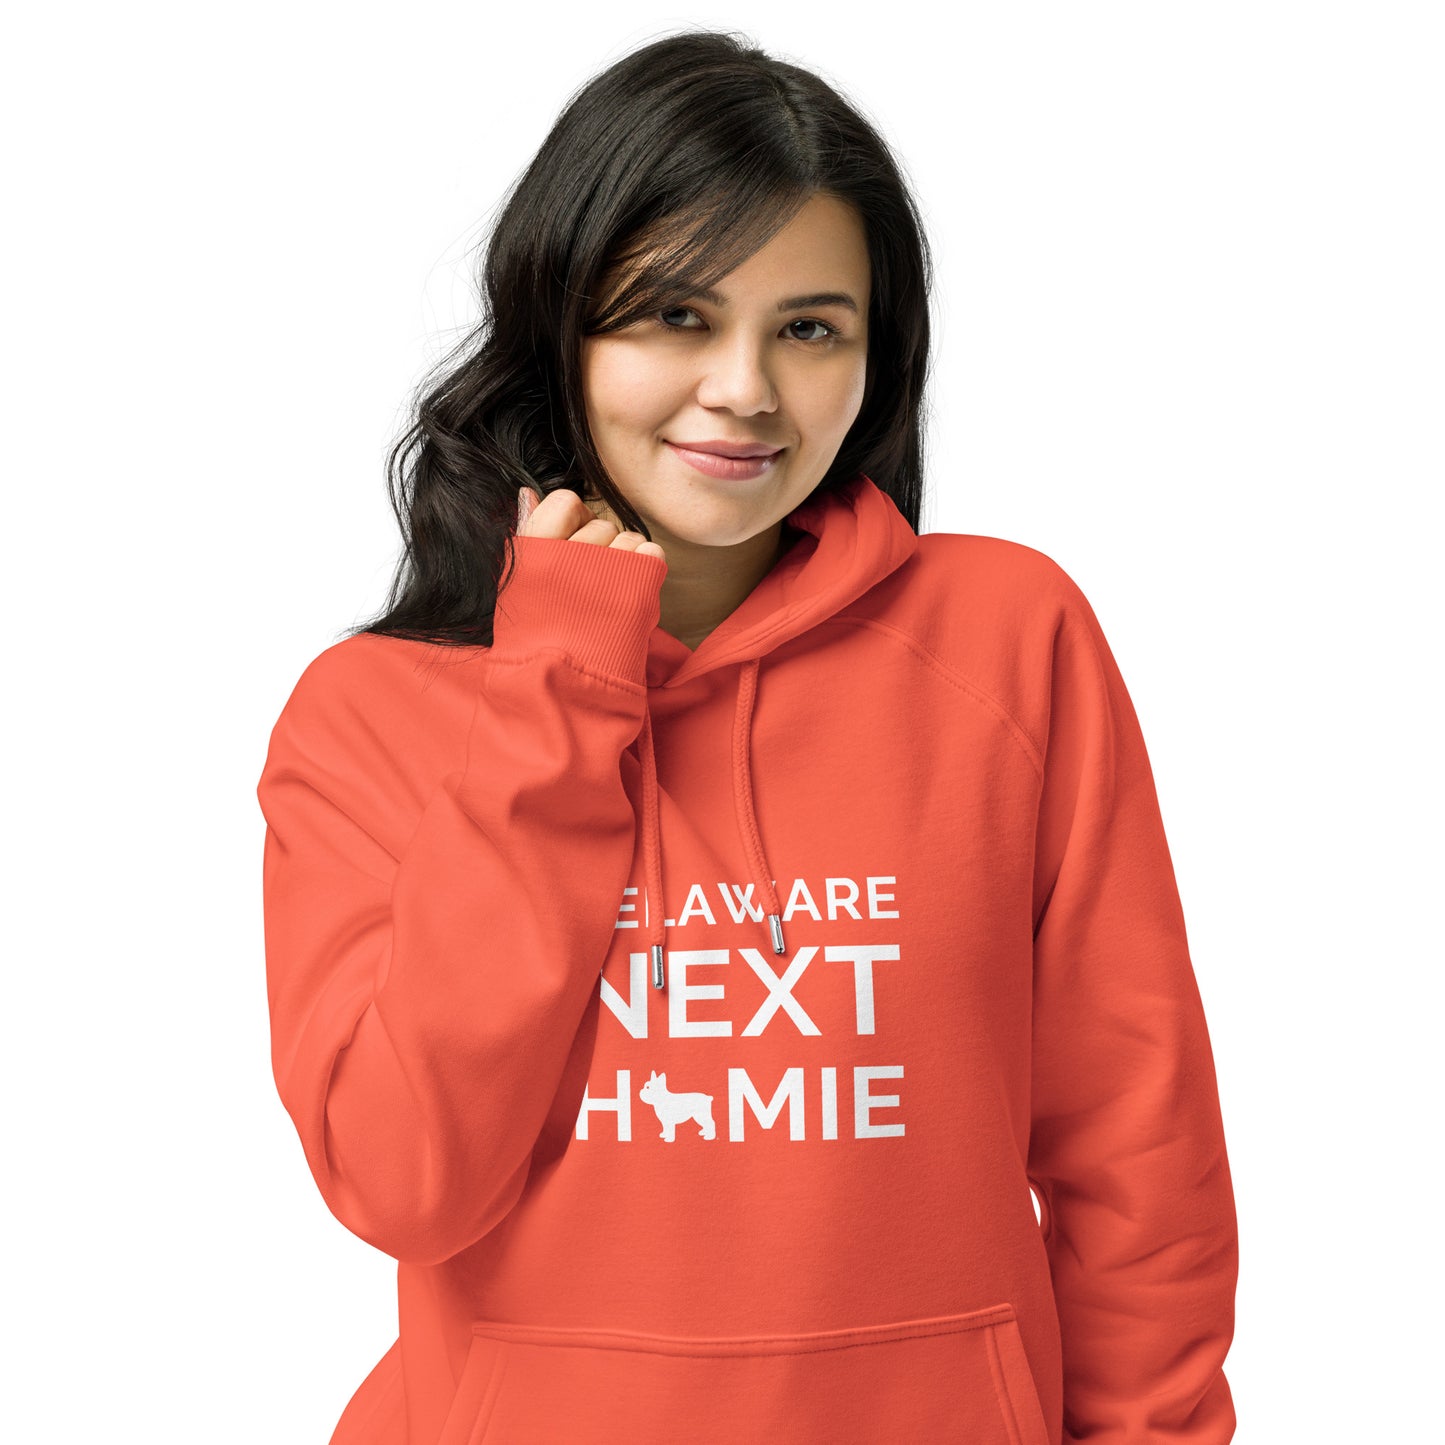 Delaware NextHomie Unisex eco raglan hoodie